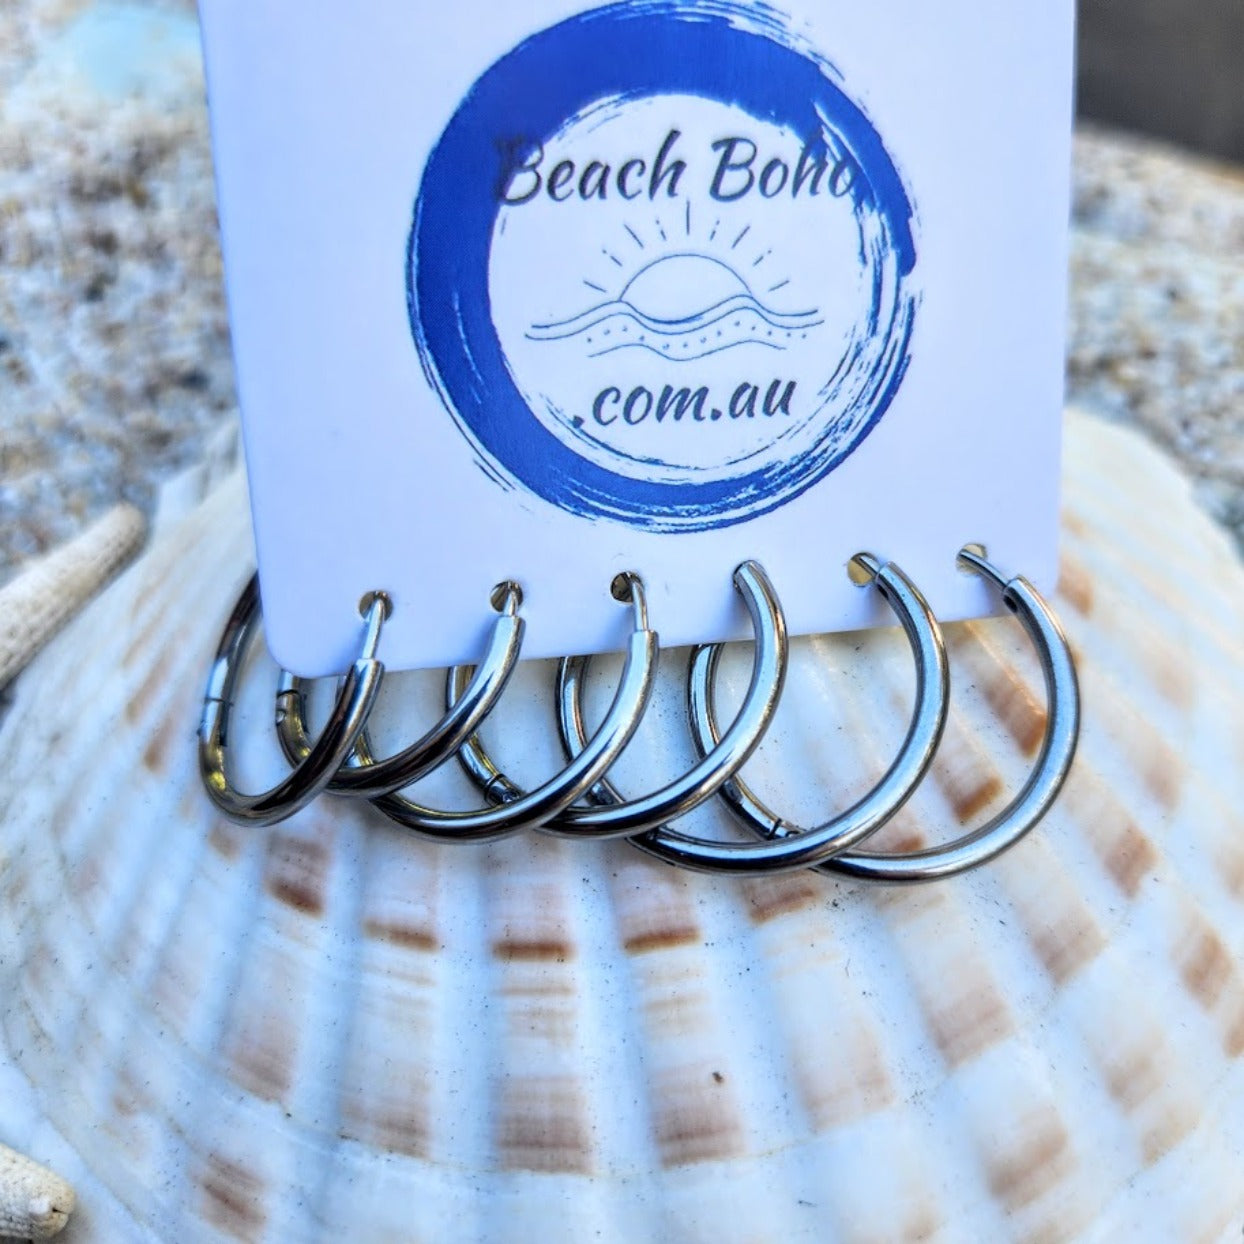 BEAUTE ROUDE 2 -  GOLD WATERPROOF HUGGIE SET OF EARRINGS - Premium earrings from www.beachboho.com.au - Just $70! Shop now at www.beachboho.com.au